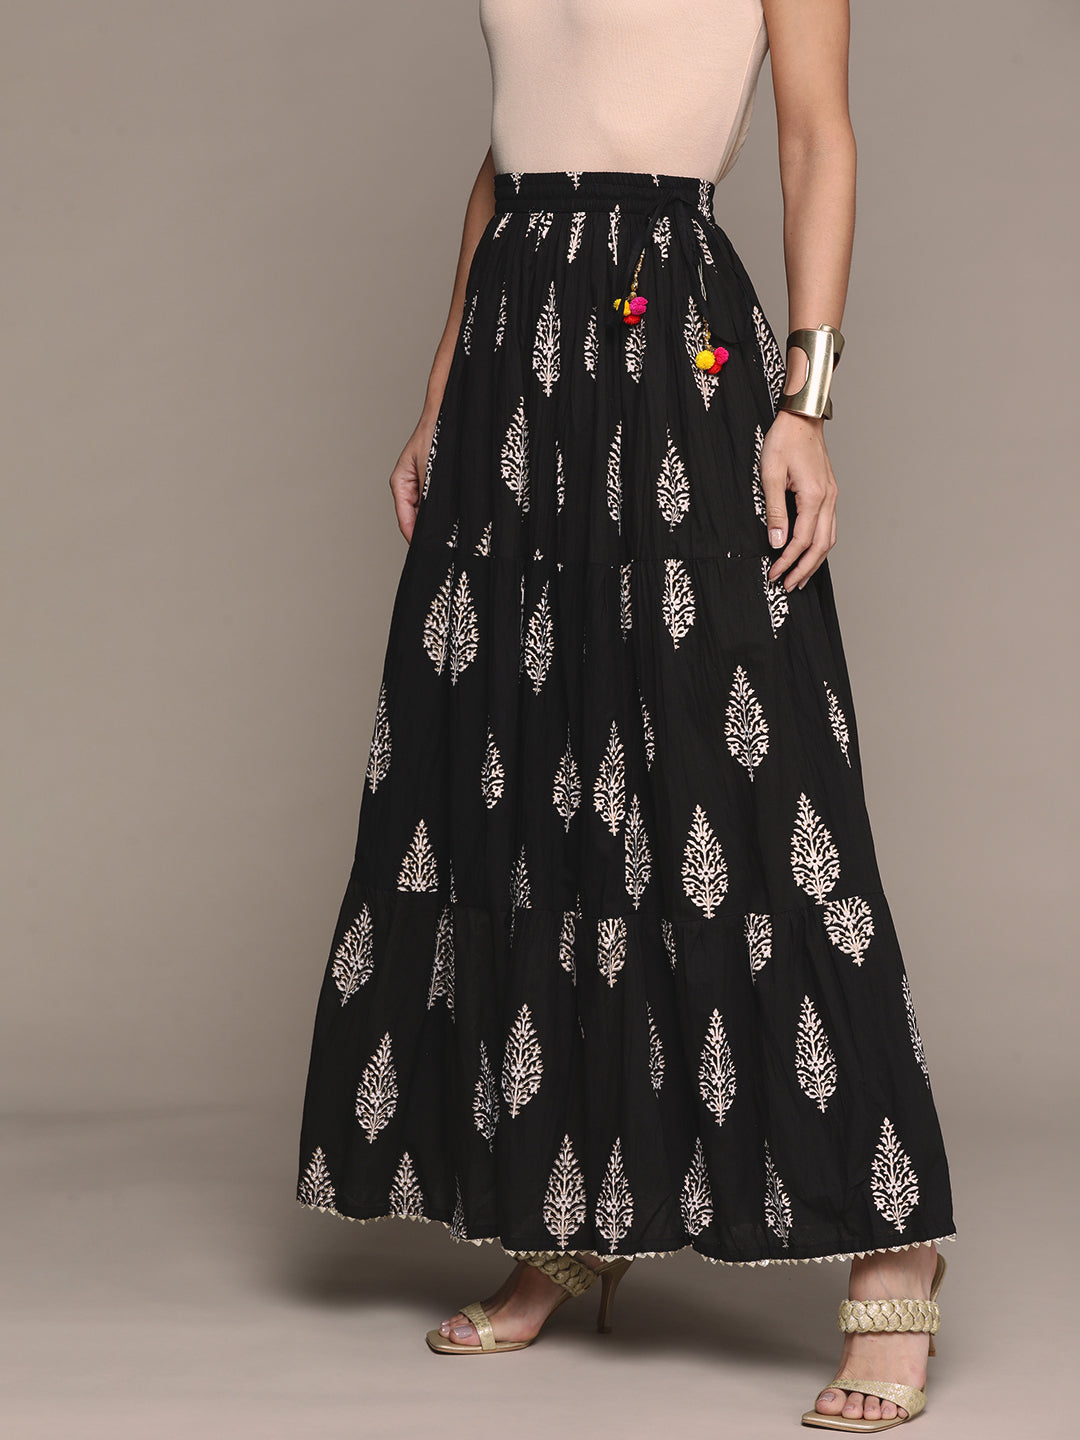 Ishin Women's Cotton Black Foil Printed Flared Maxi Skirt